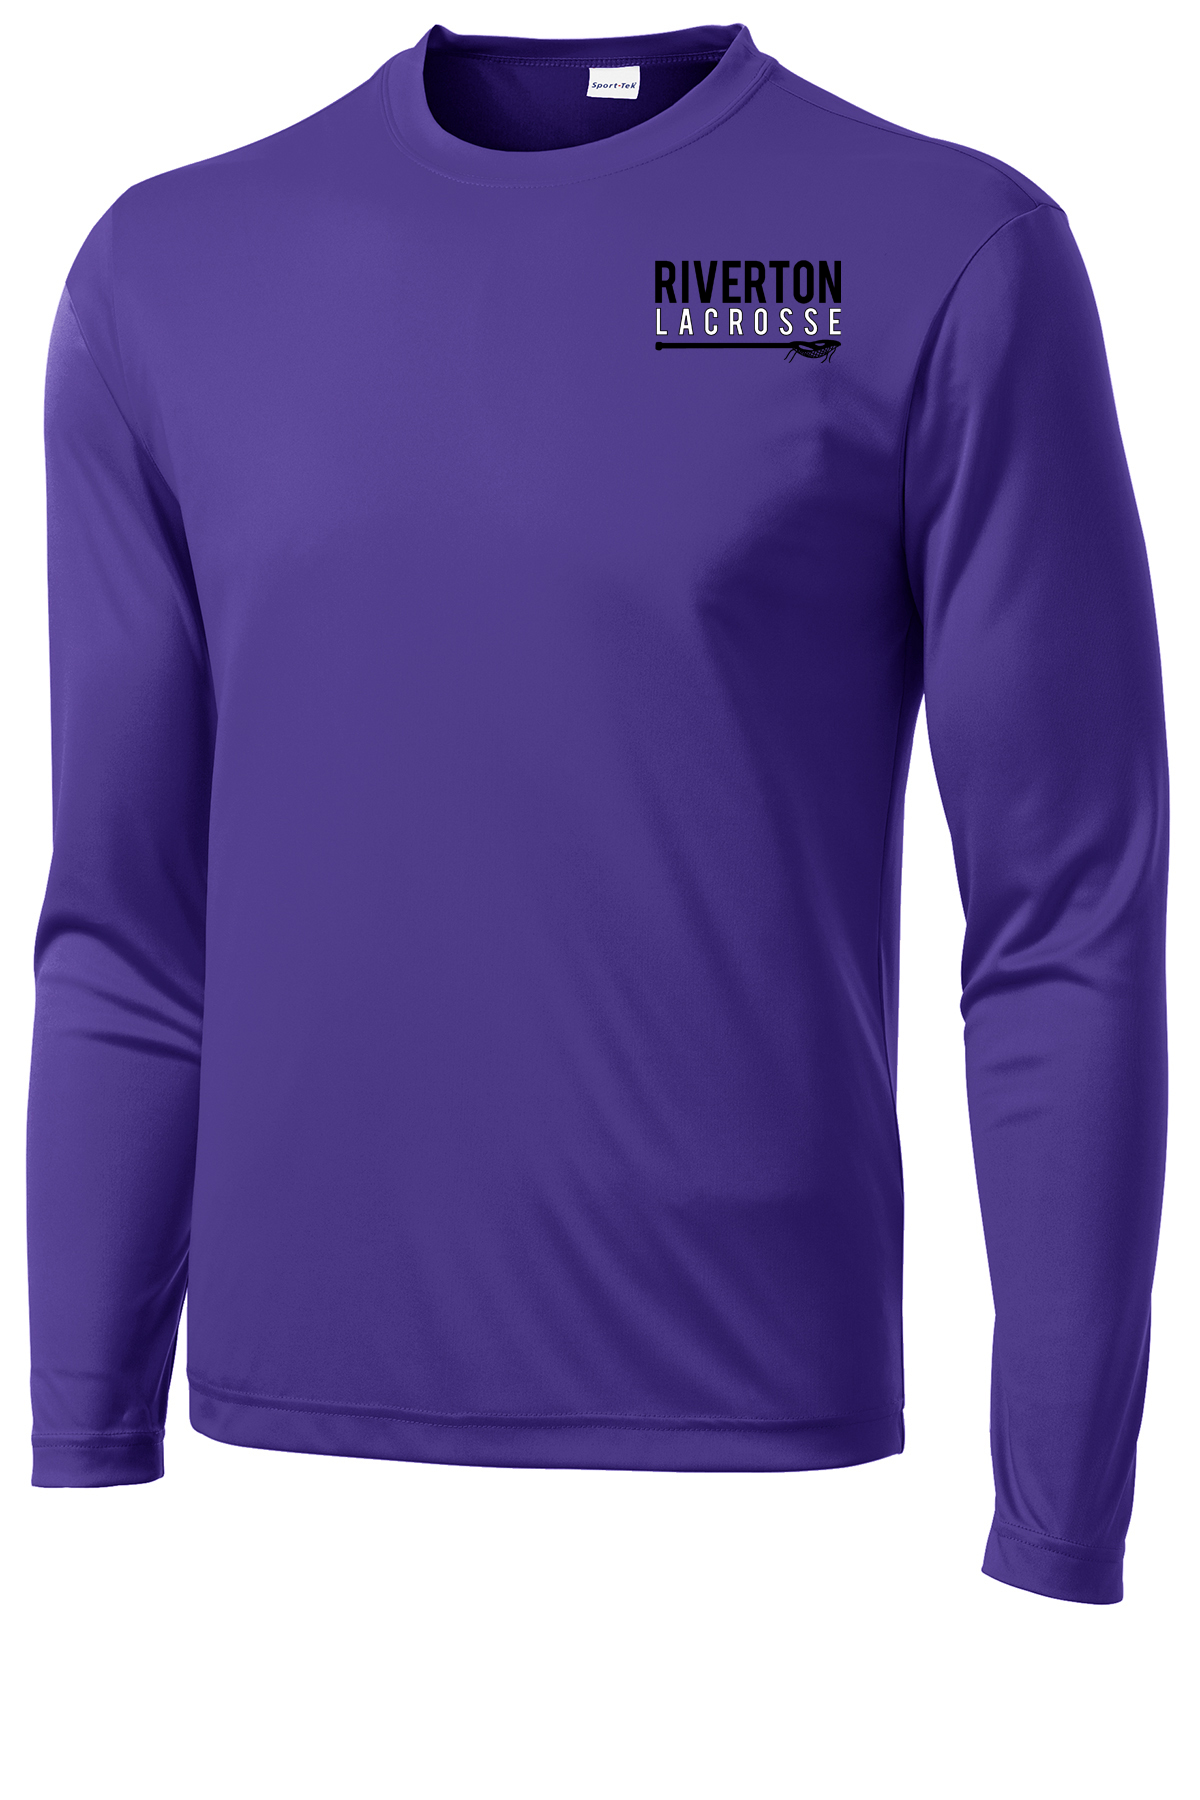 Riverton Lacrosse Long Sleeve Performance Shirt